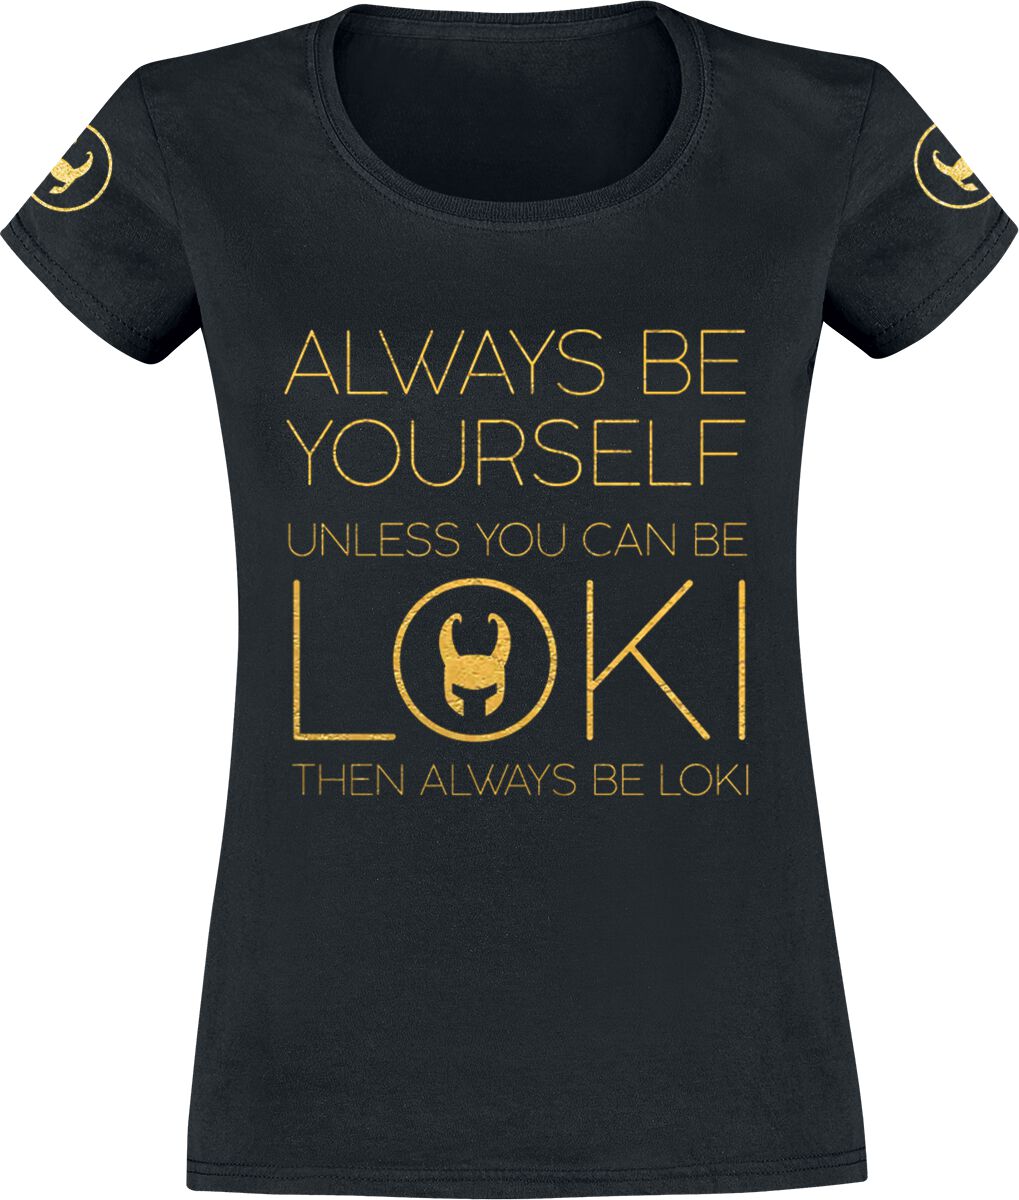 Loki Always Be Yourself T-Shirt schwarz in S